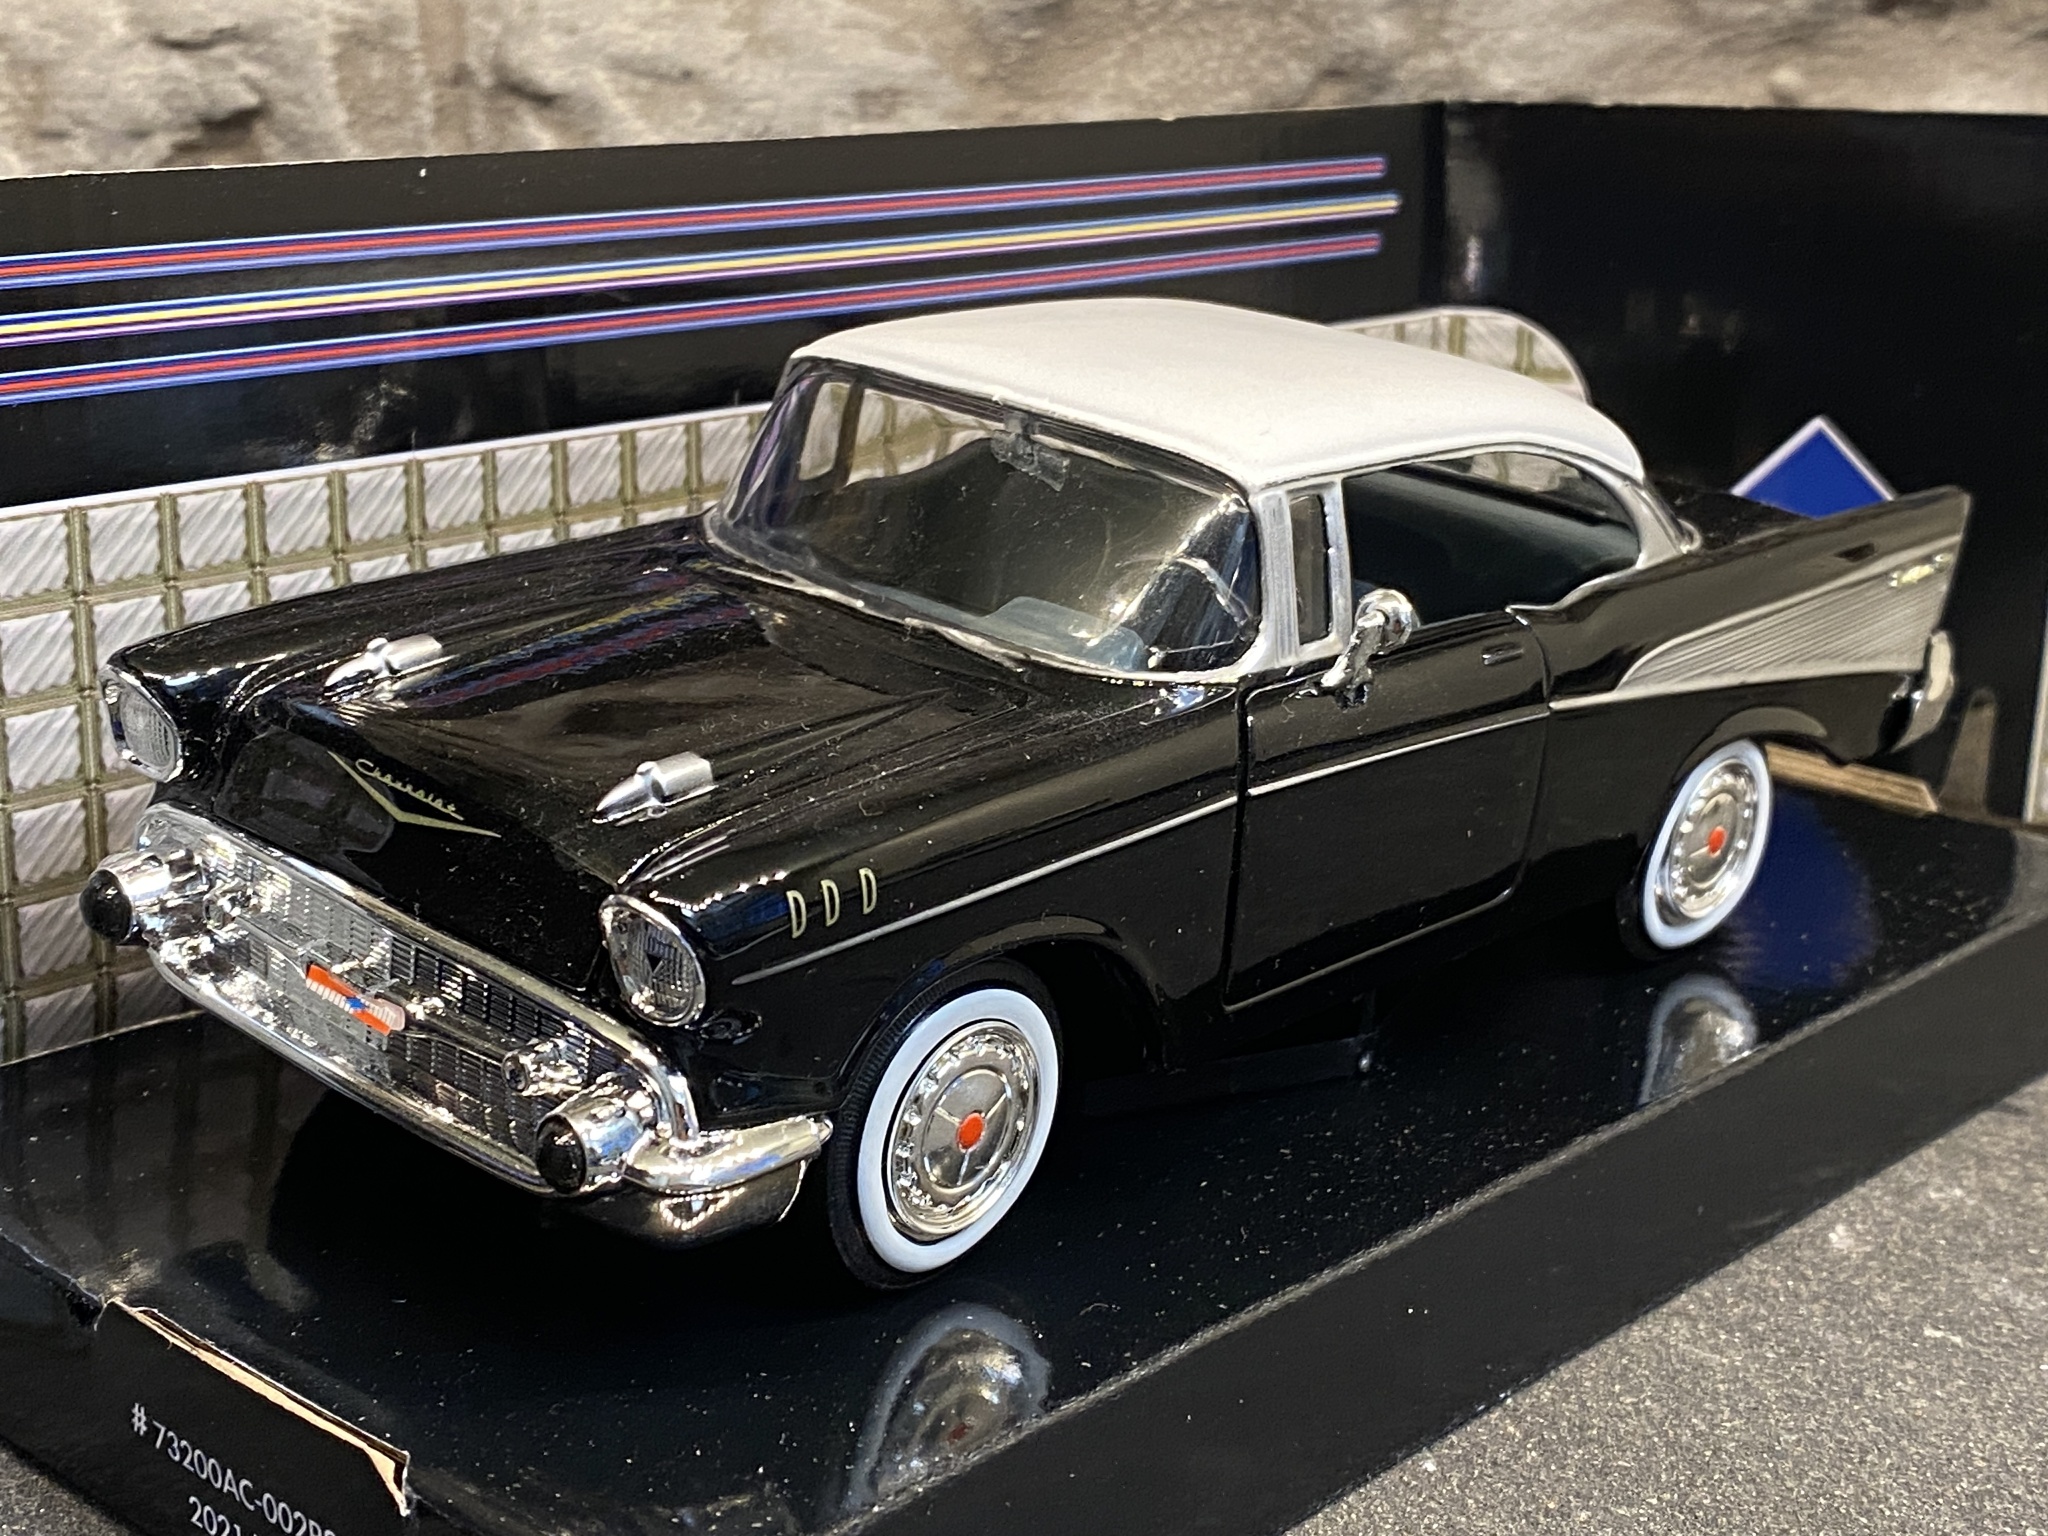 Skala 1/24: 1957 Chevy Bel Air, Black/Silver fr MotorMax "American Classics"